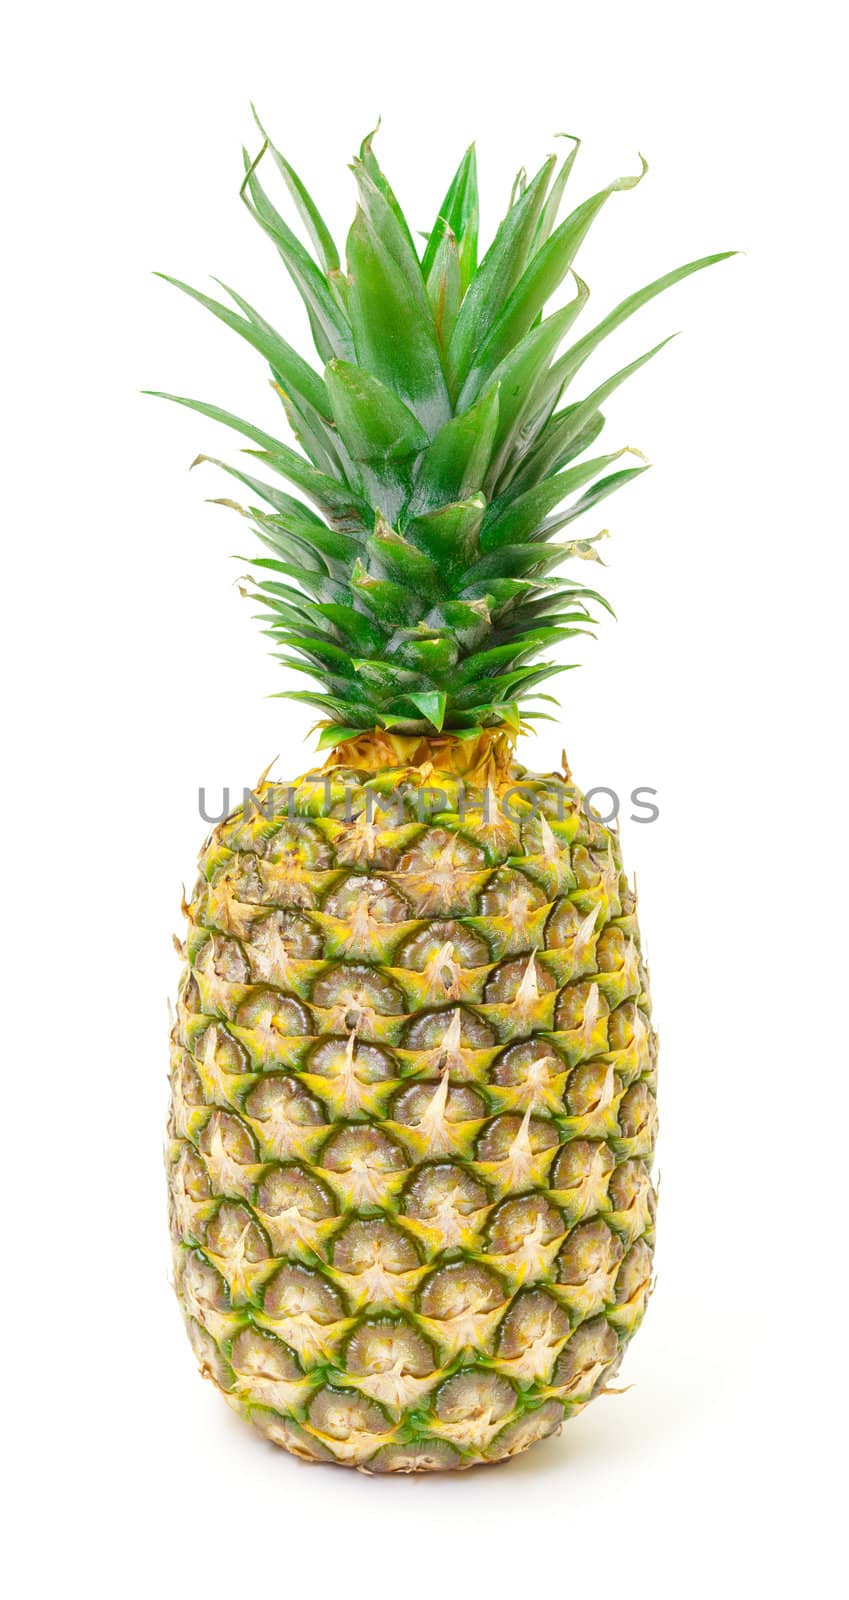 Ripe Pineapple Fruit,  isolated on white background